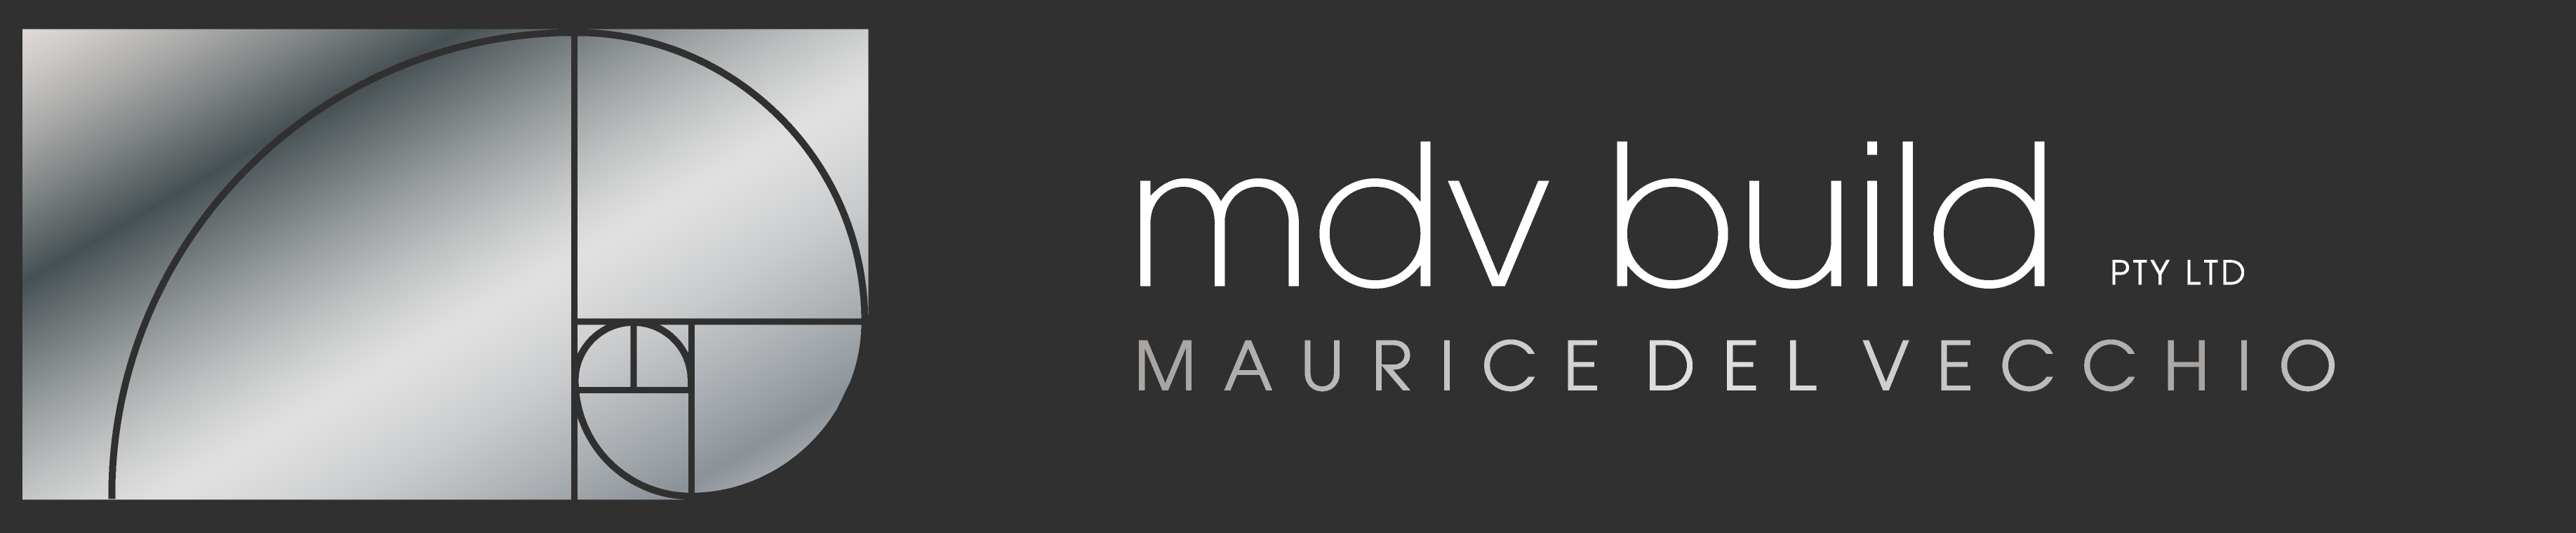 www.mdvbuild.com.au           maurice@mdvbuild.com.au  p 0405